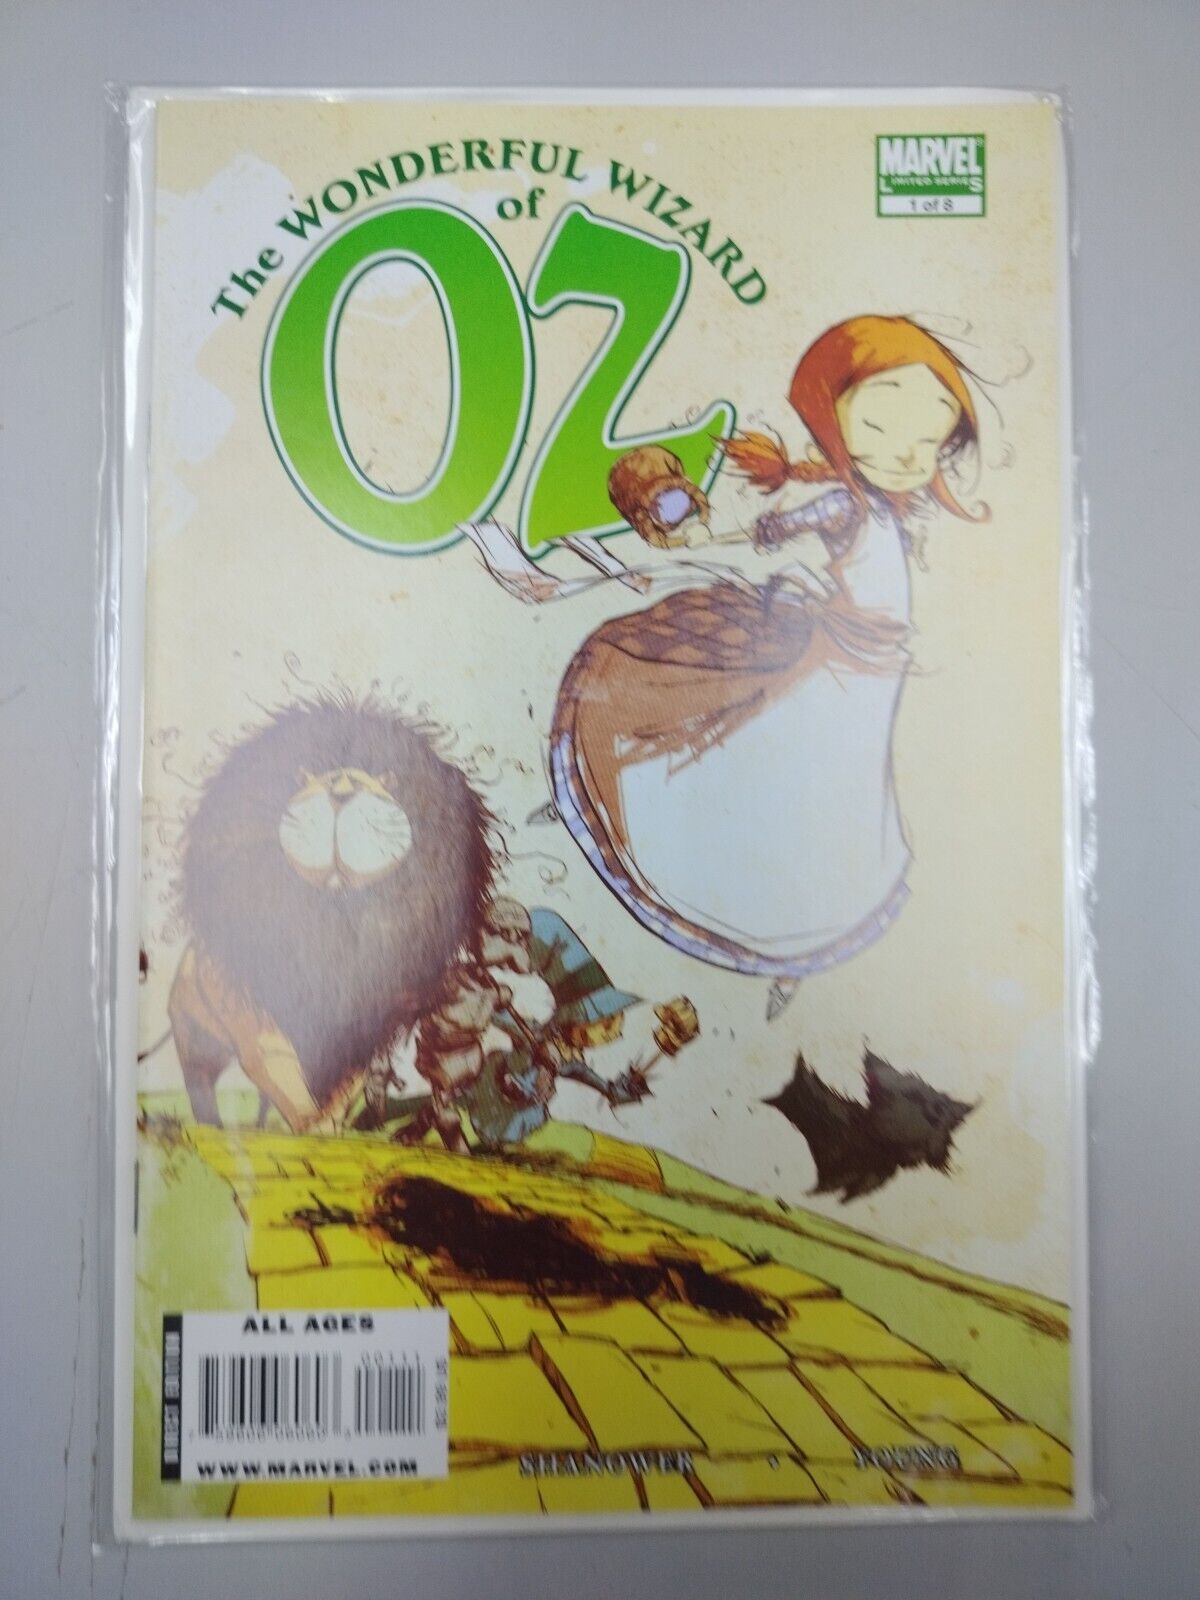 WONDERFUL WIZARD OF OZ #1 BOOK MARKET VARIANT MARVEL COMICS SKOTTIE YOUNG NM